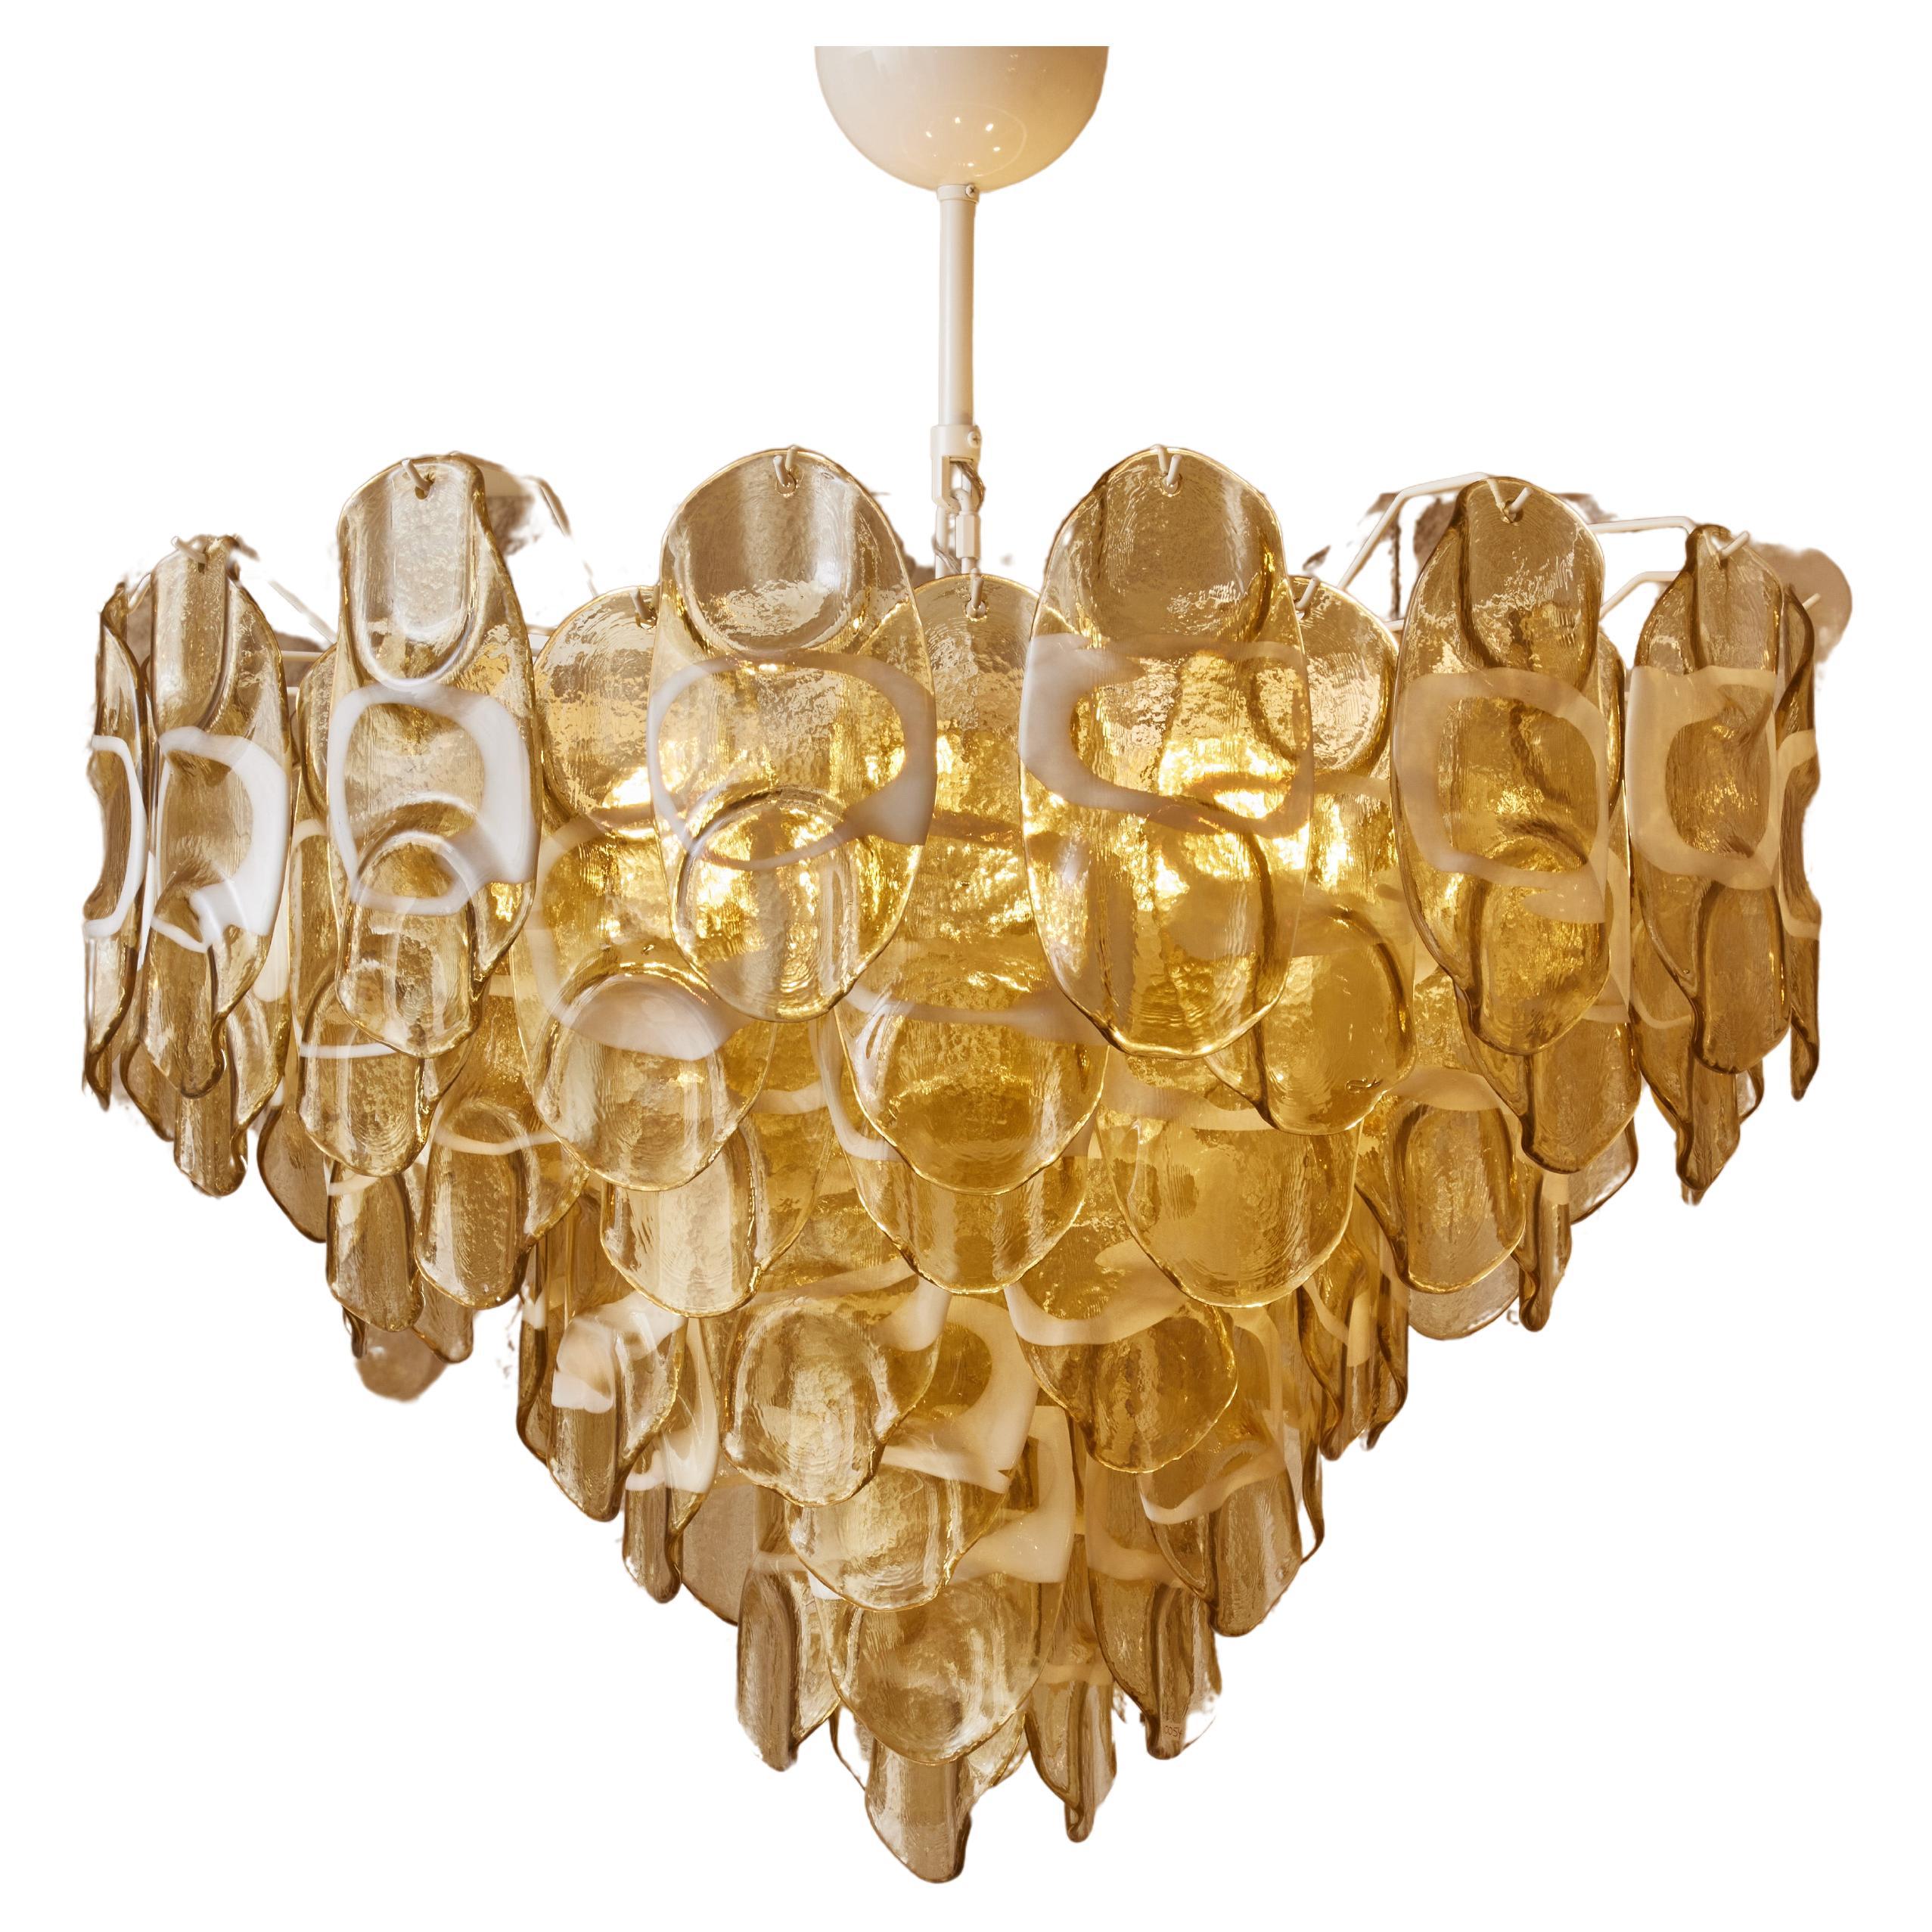 Murano glass chandelier by Studio Glustin For Sale